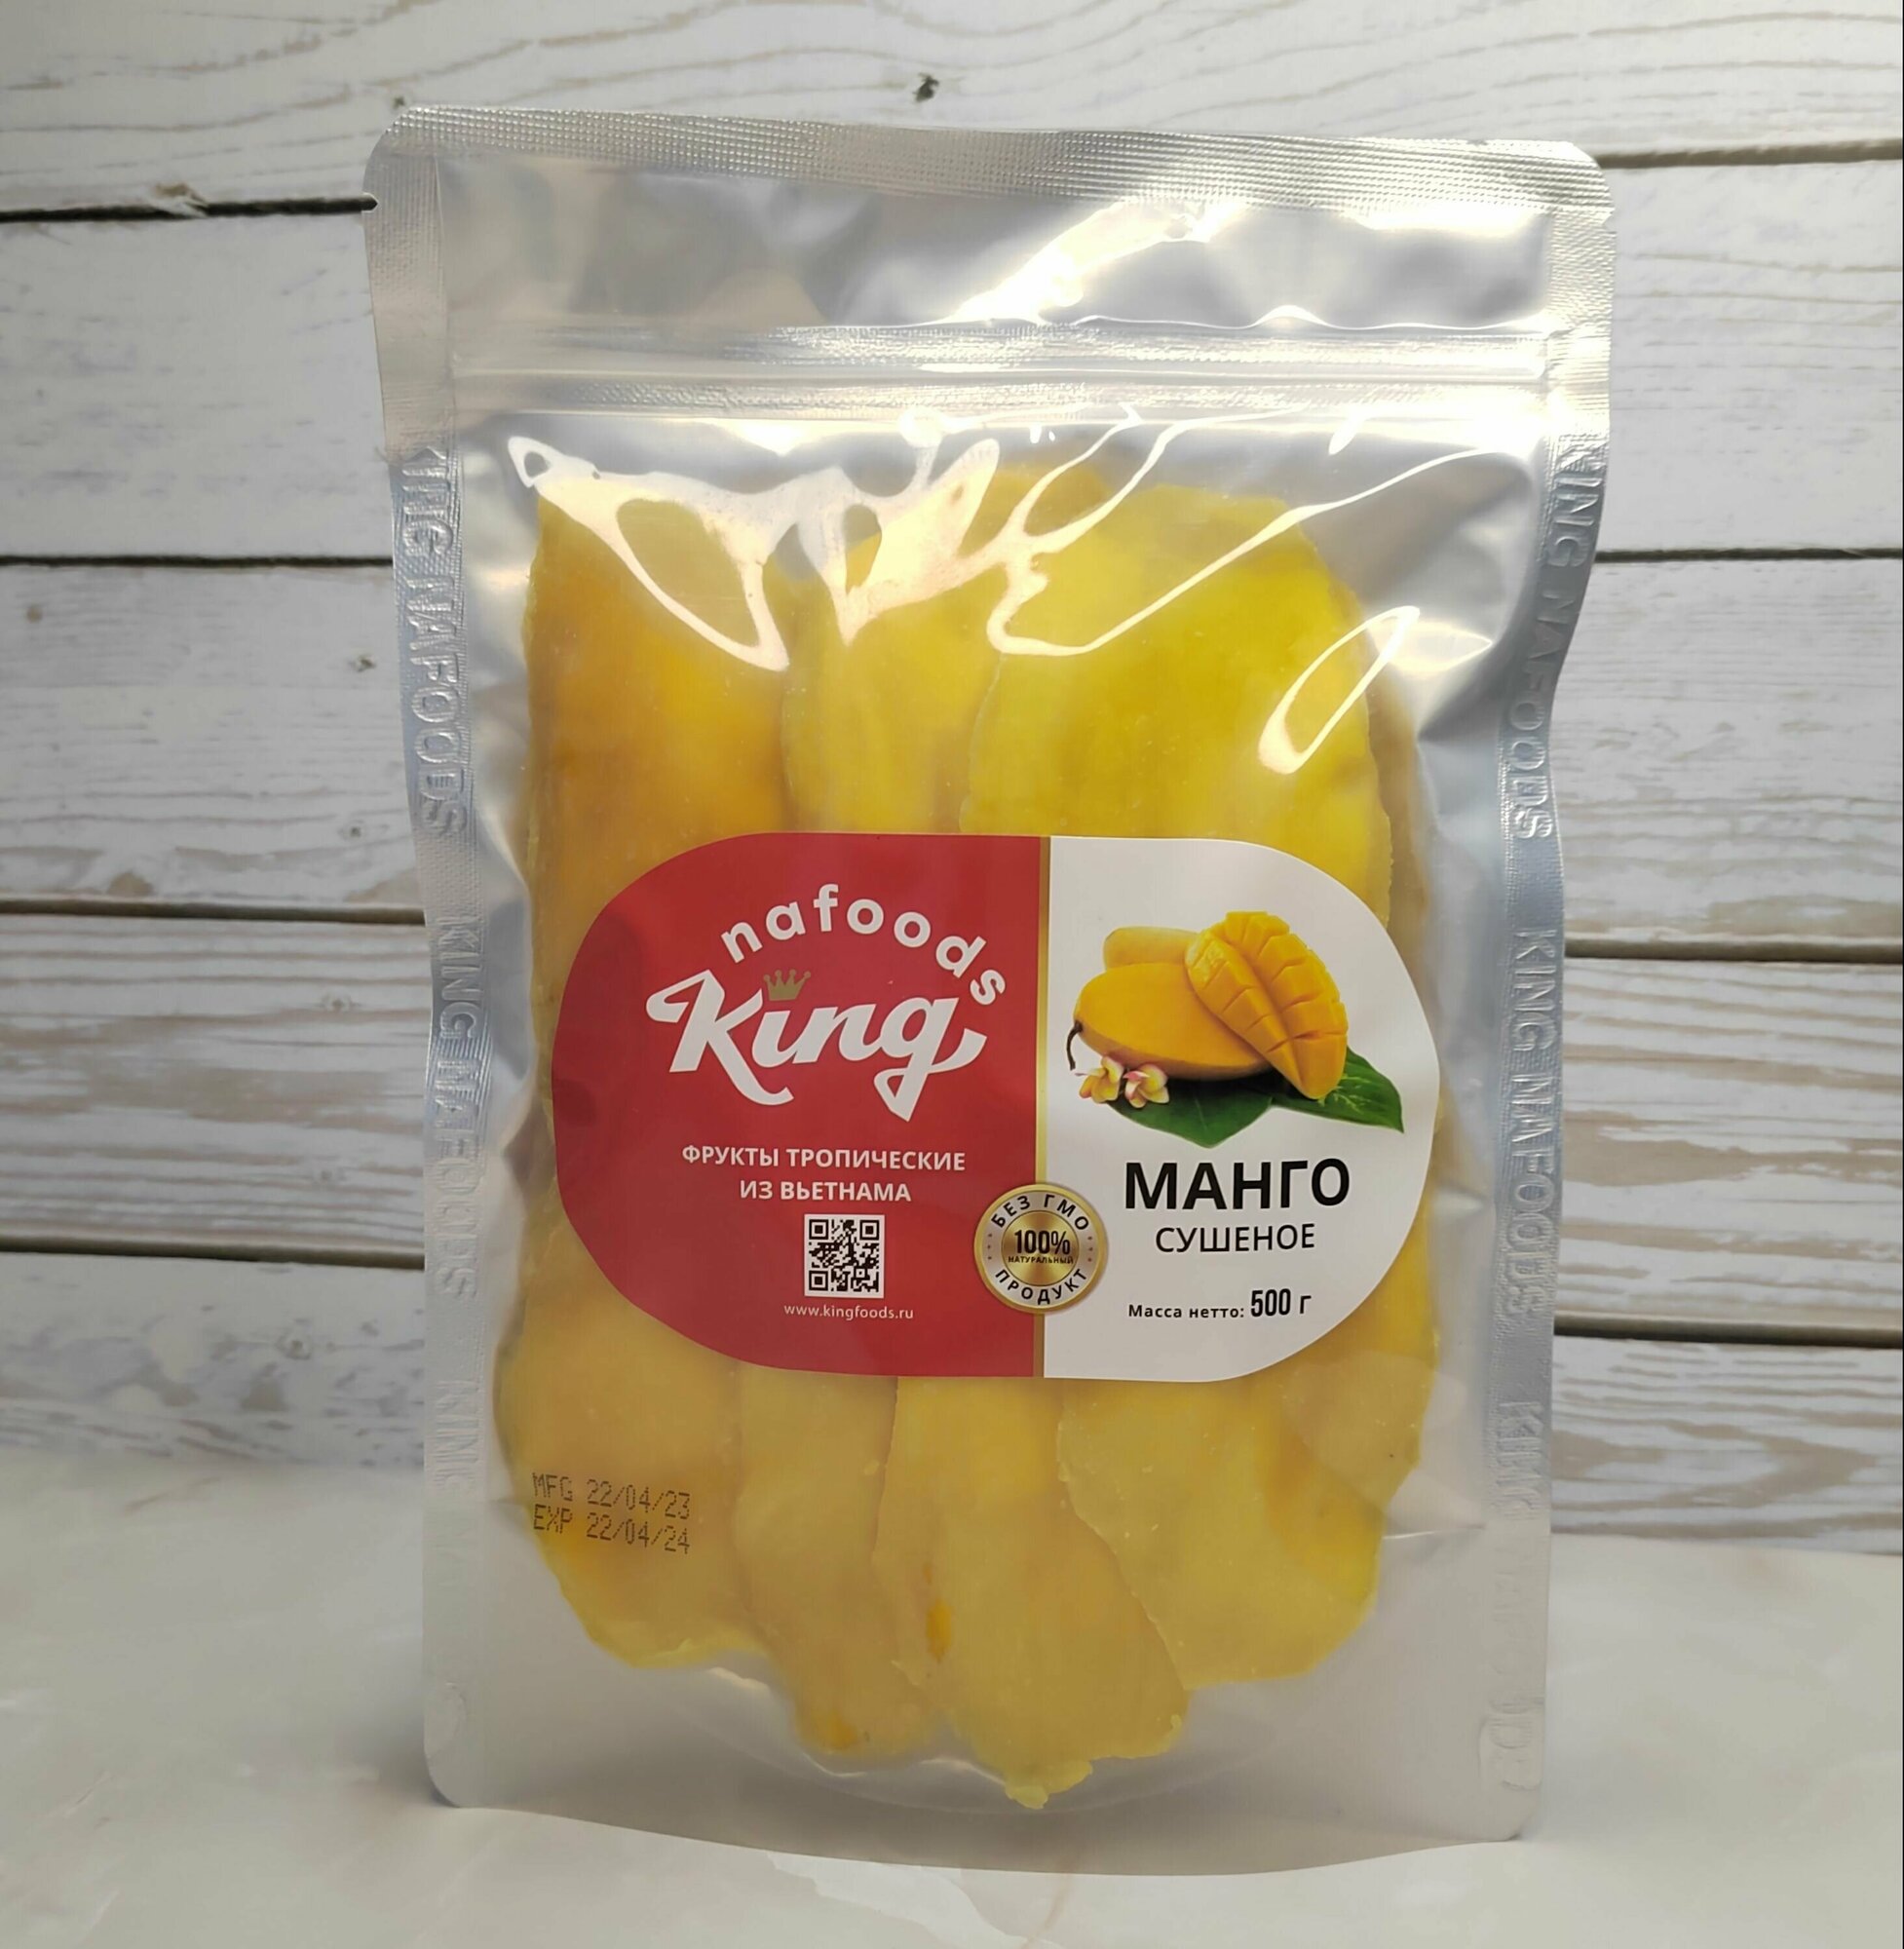 Манго сушеное "King" 100% натуральное, 0.5кг